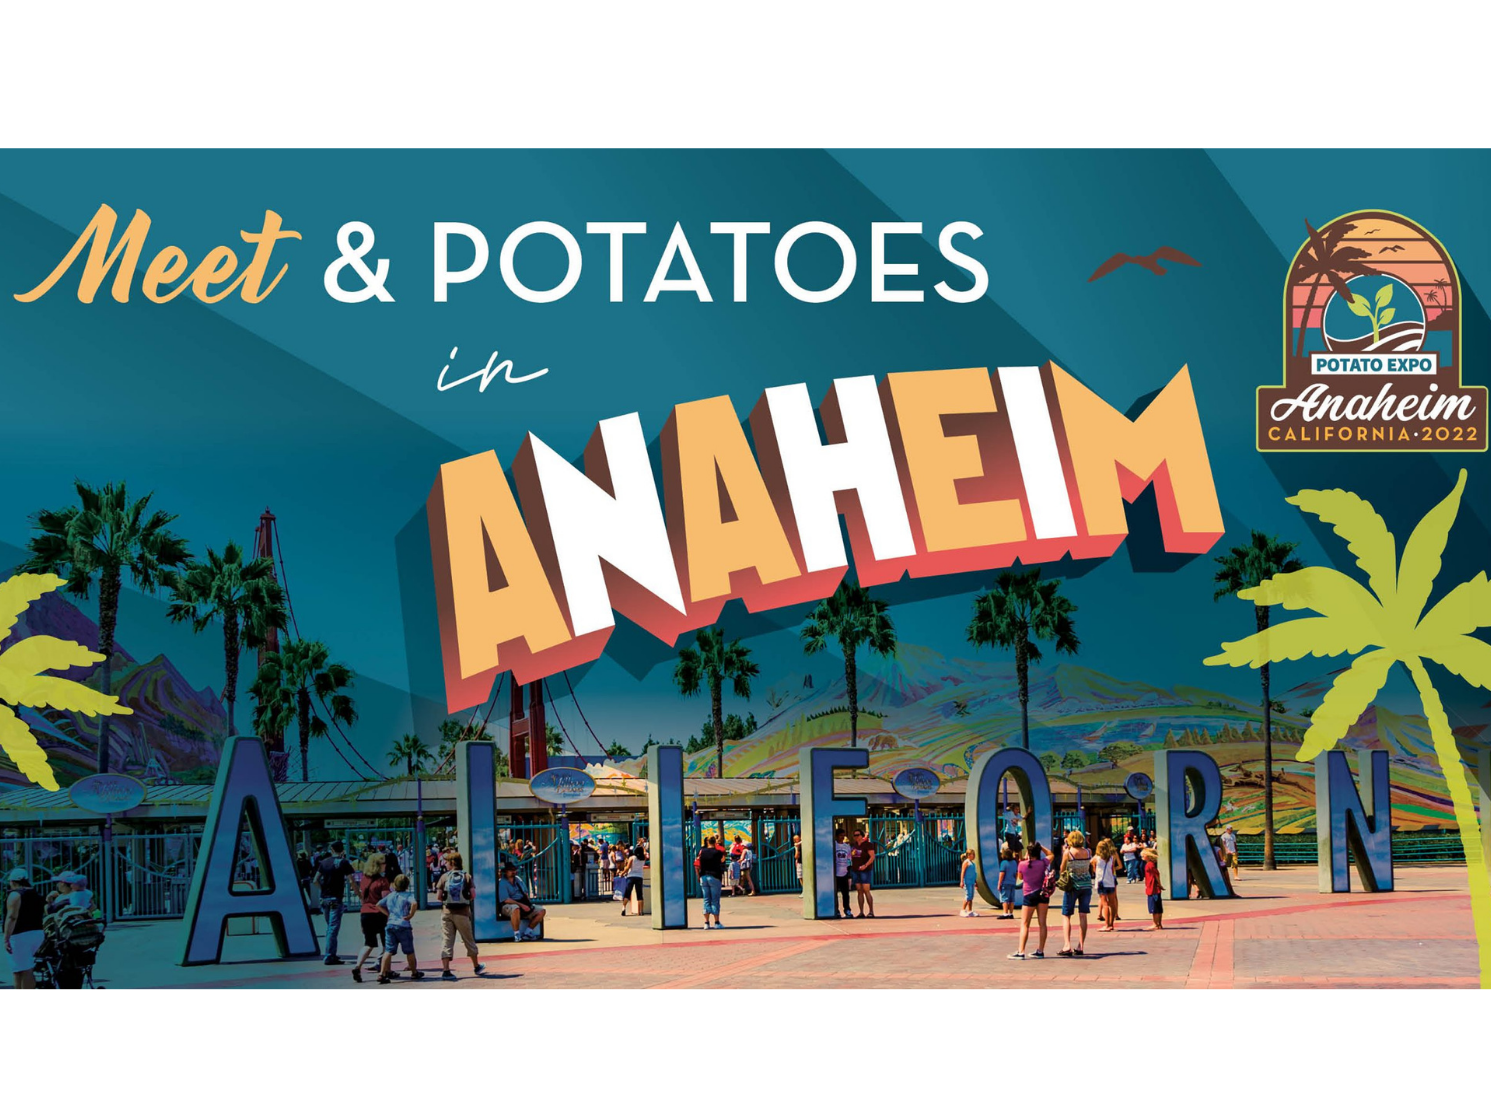 Potato Expo 2022 | Anaheim, CA